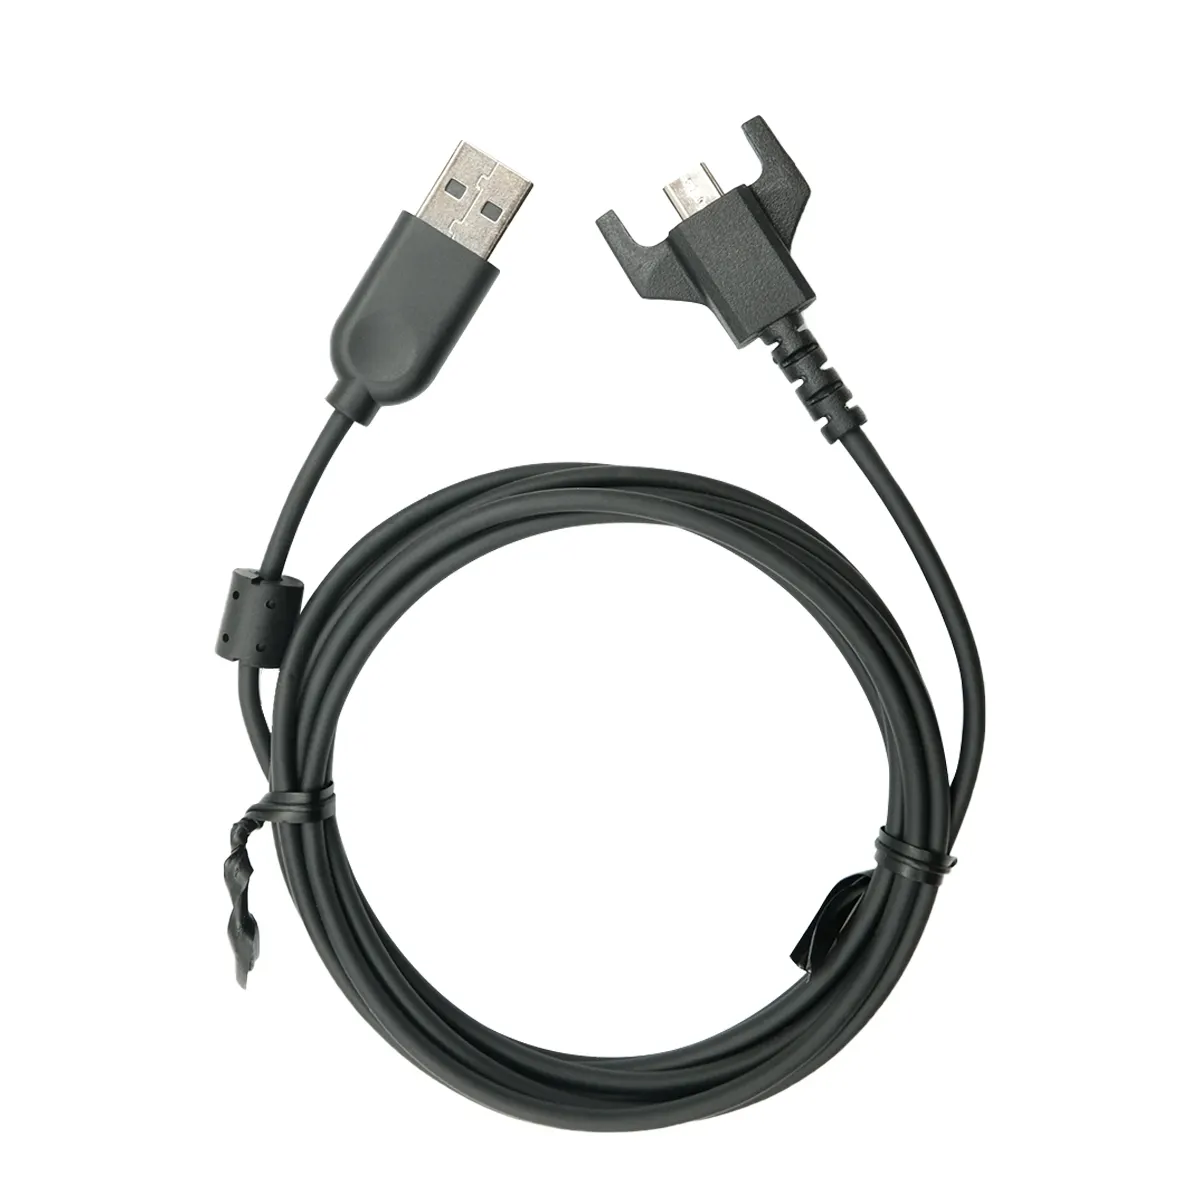 Cable de carga USB original Logitech para G703 G900 G903 G Pro Wireless G Pro X Superlight Gaming Mouse, USB a Micro USB (negro)